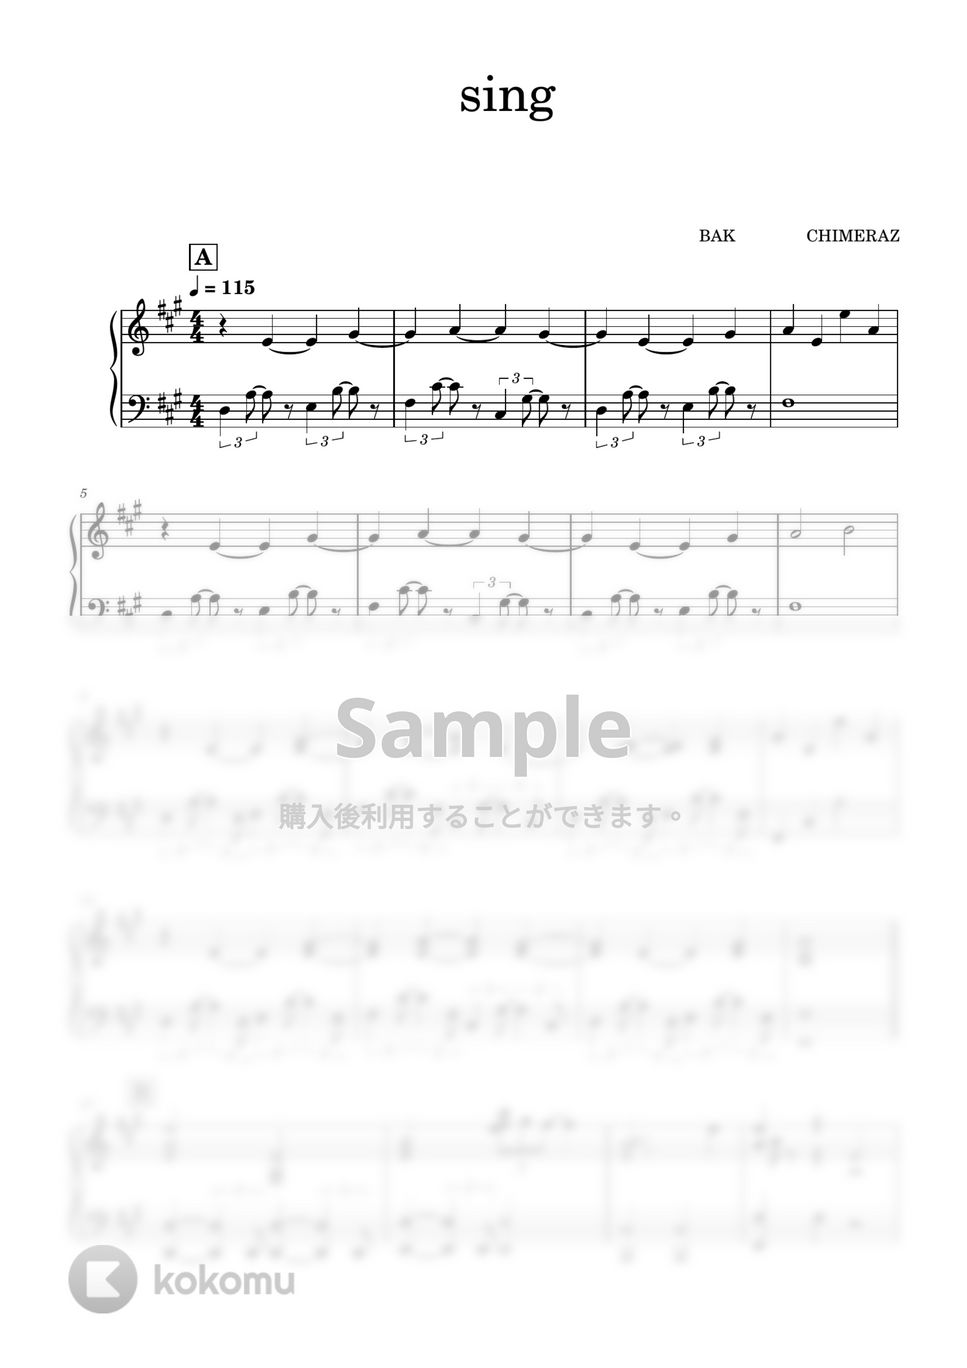 BAK - 愛sing (ピアノ伴奏) by やまといぶの伴奏